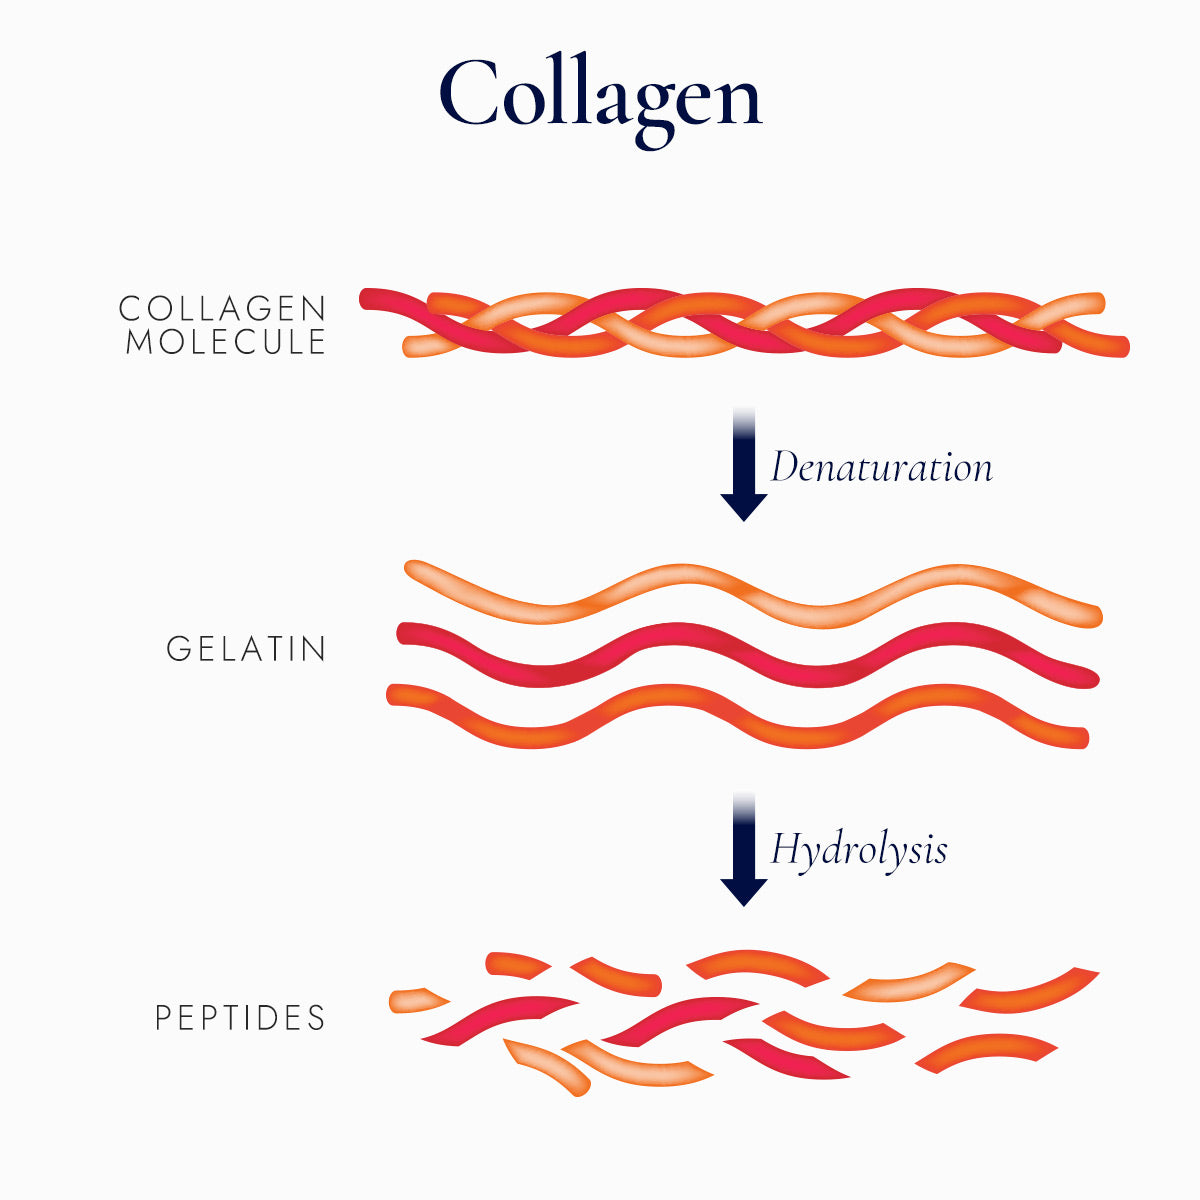 Collagen molecule structure